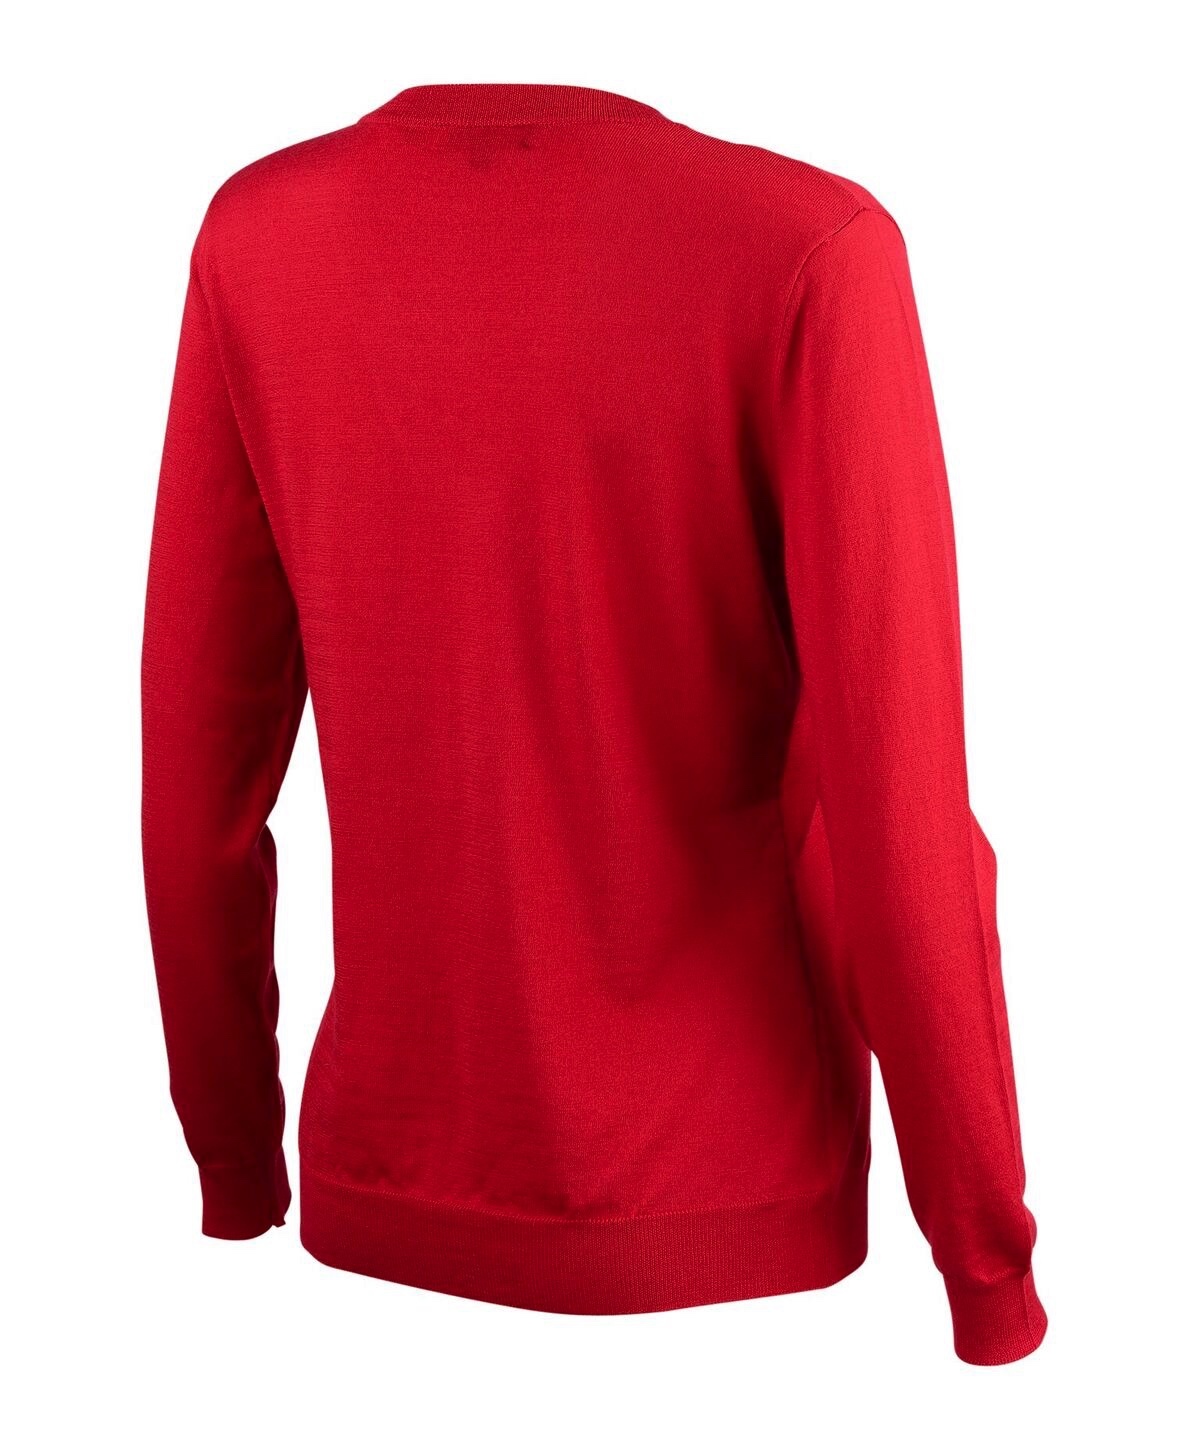 Leura V-Neck Sweater - Red - 2